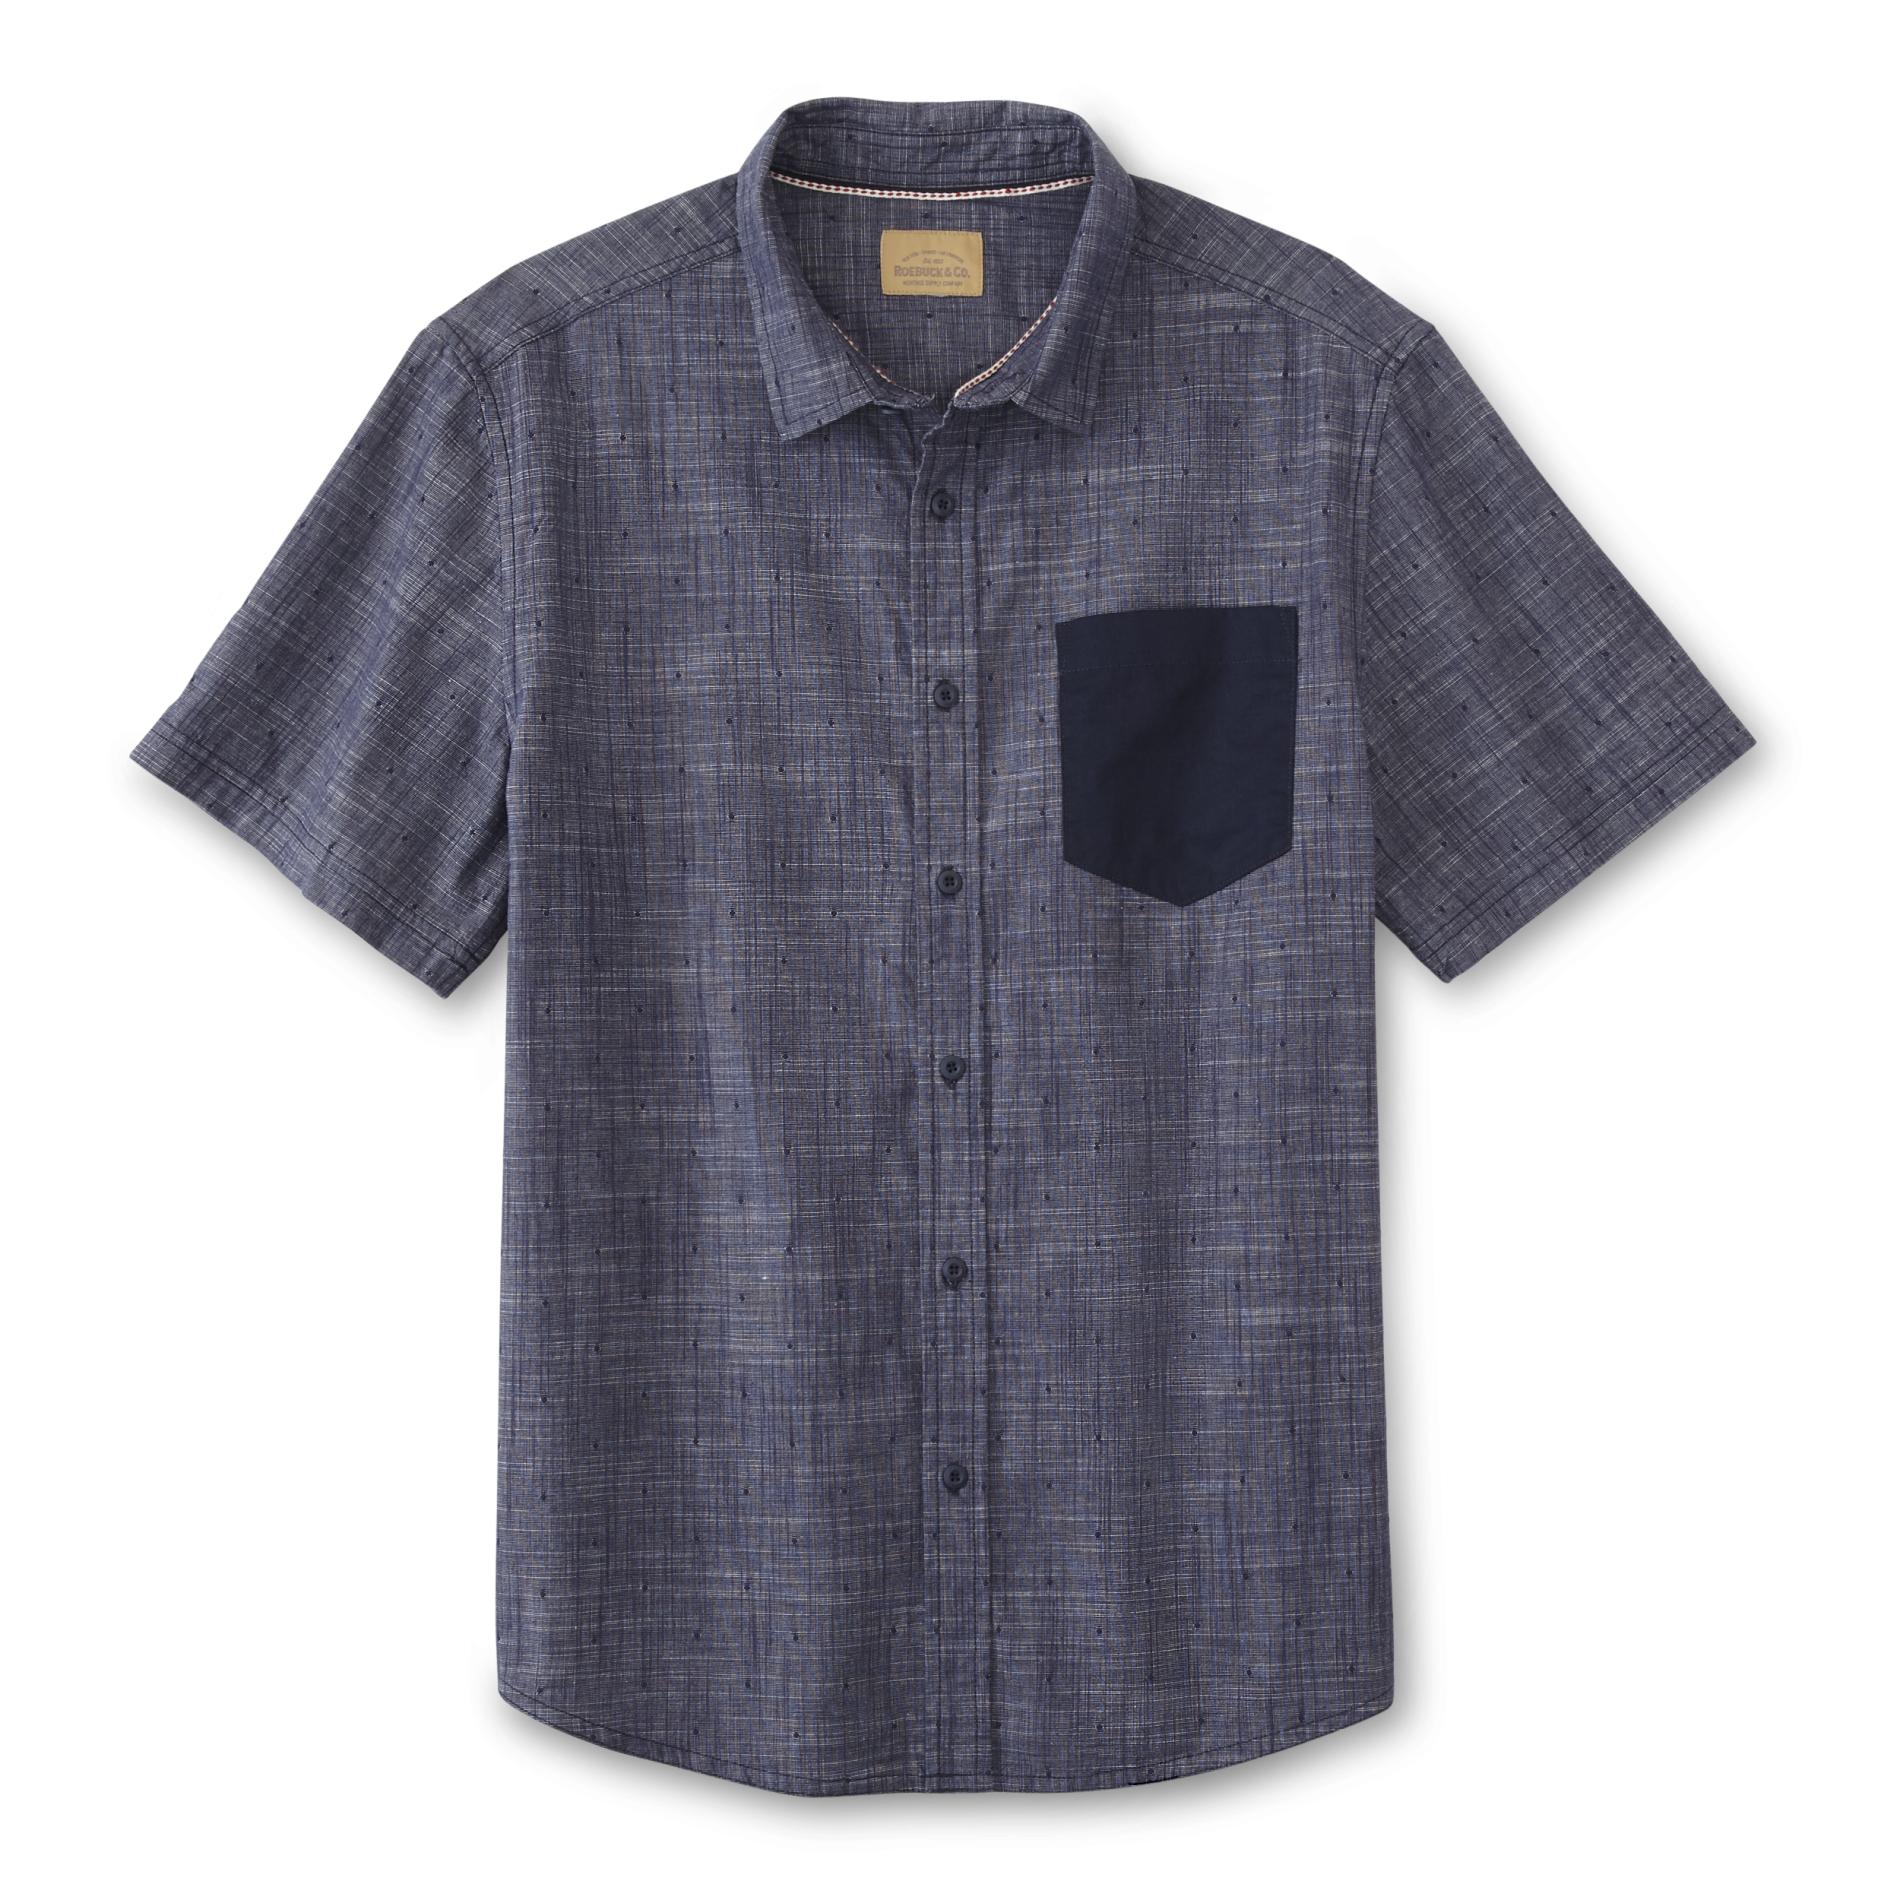 Roebuck & Co. Young Men's Short-Sleeve Shirt